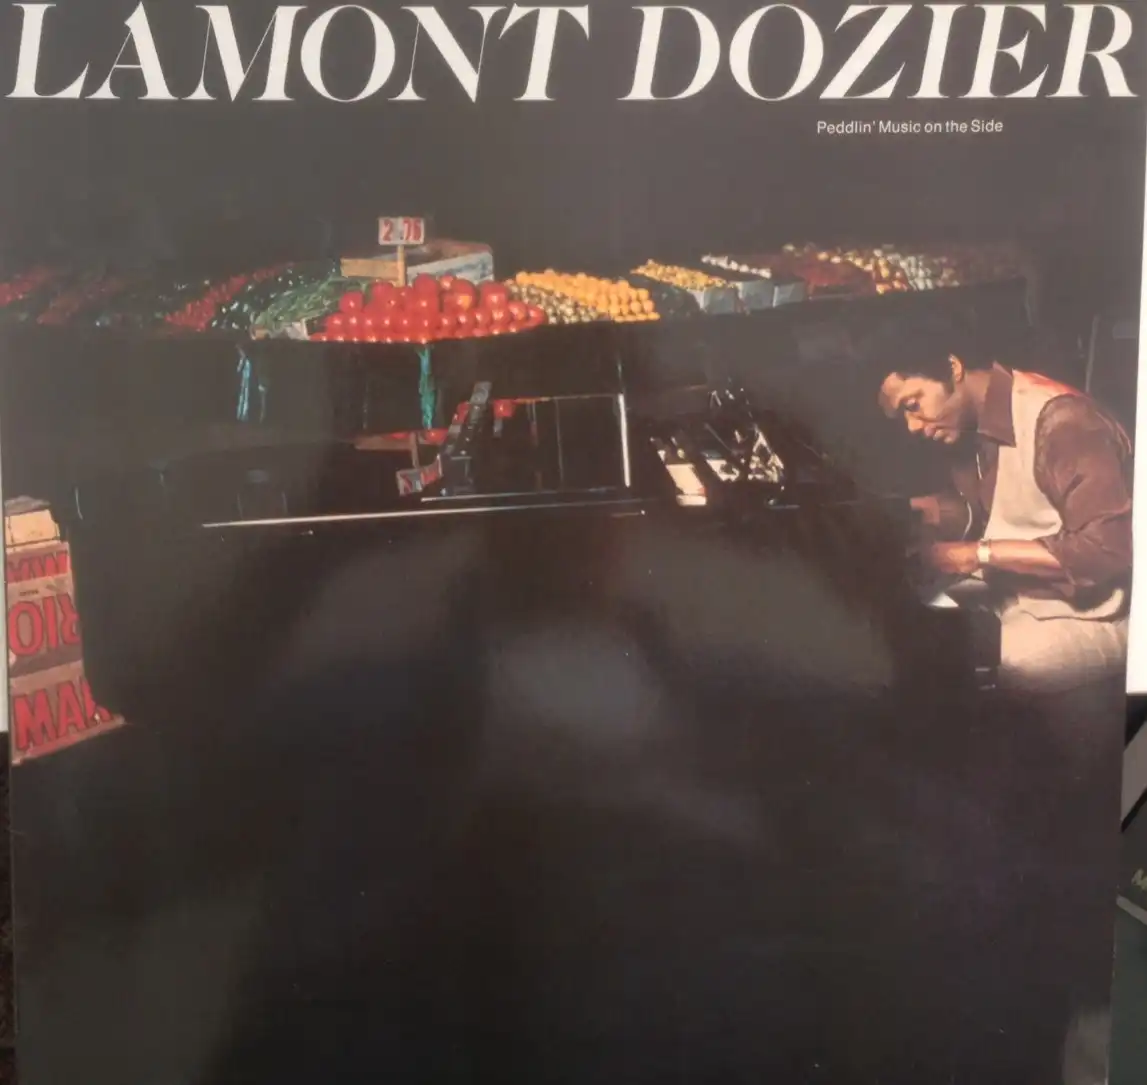 LAMONT DOZIER / PEDDLIN' MUSIC ON THE SIDE